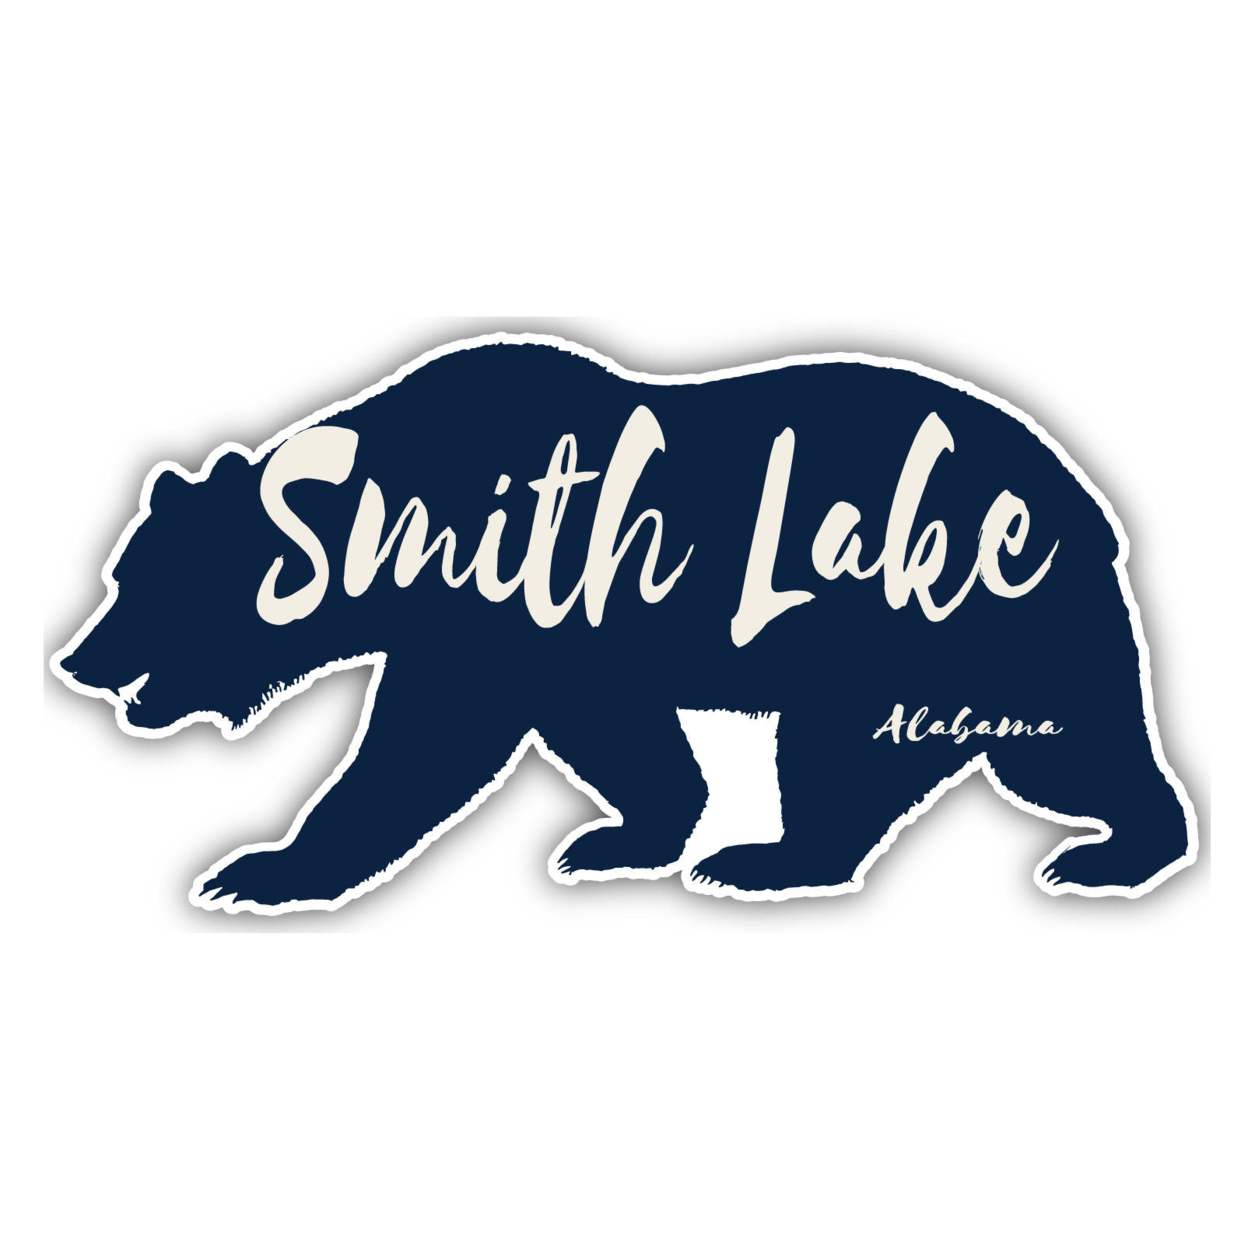 Smith Lake Alabama Souvenir Decorative Stickers (Choose Theme And Size) - Single Unit, 4-Inch, Camp Life